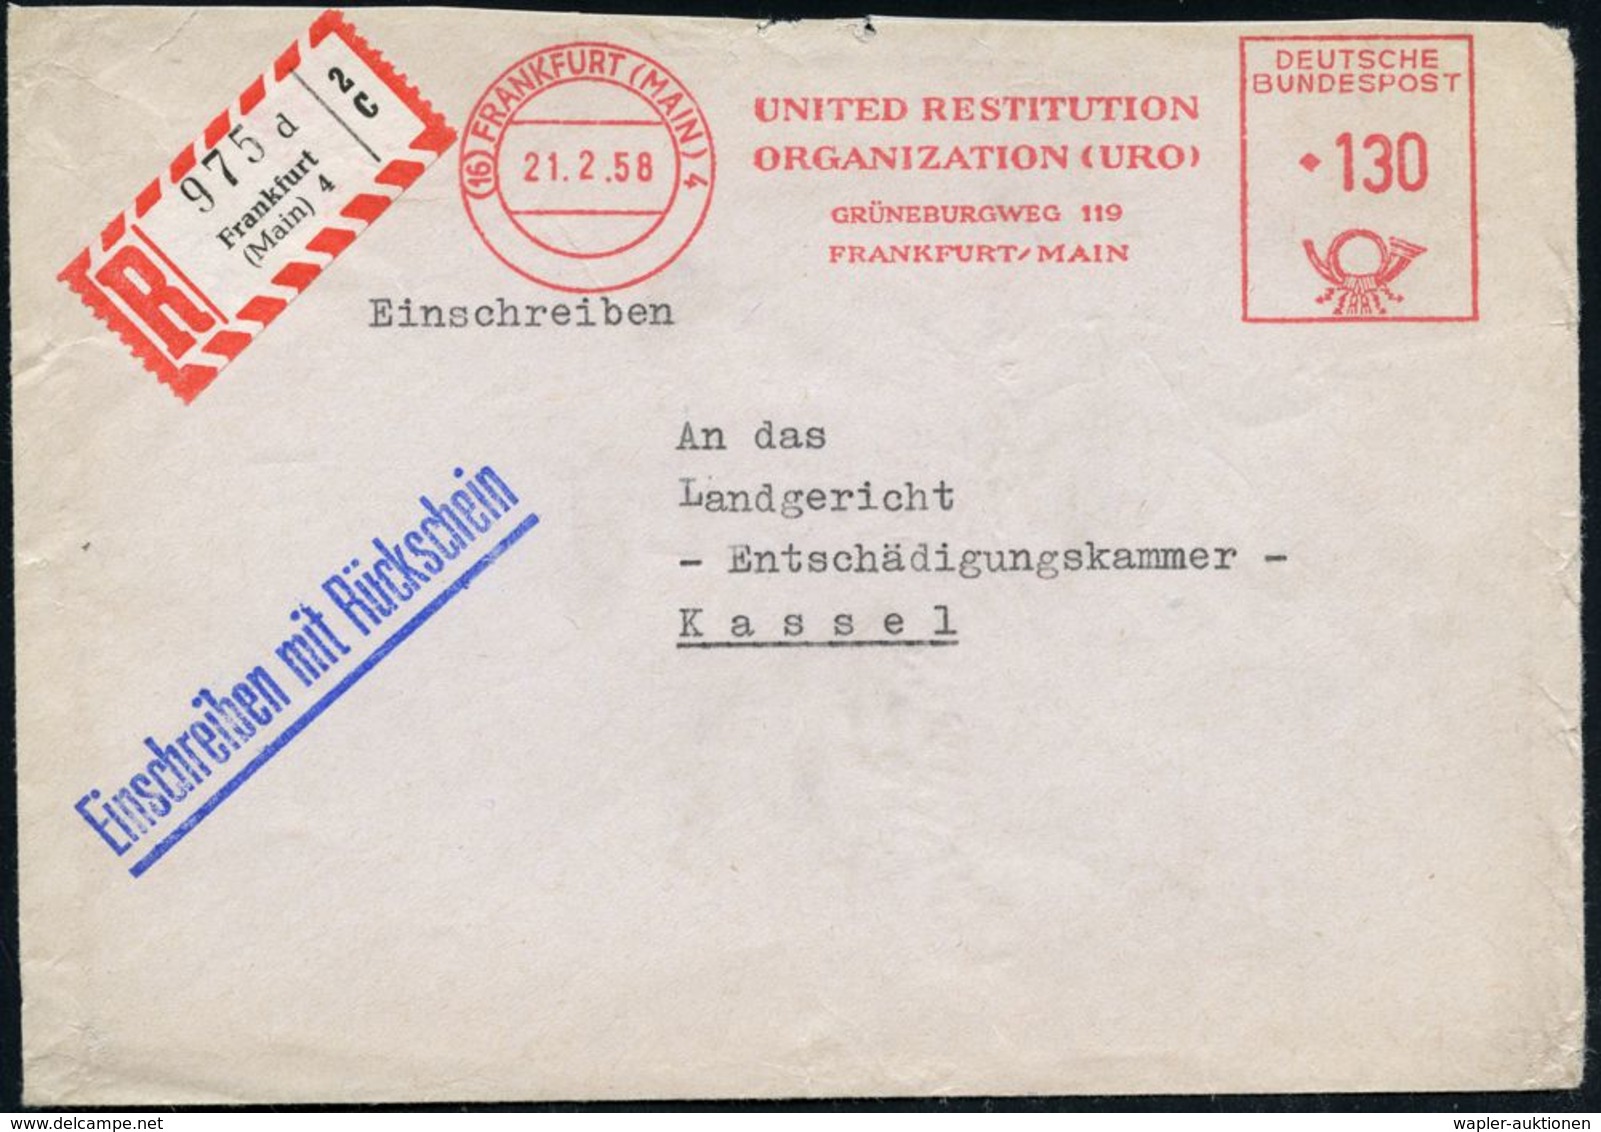 (16) FRANKFURT (MAIN)4/ UNITED RESTITUTION/ ORGANIZATION (URO).. 1958 (21.2.) AFS 130 Pf. + RZ: Frankfurt/(Main) 4/d (ob - Guidaismo